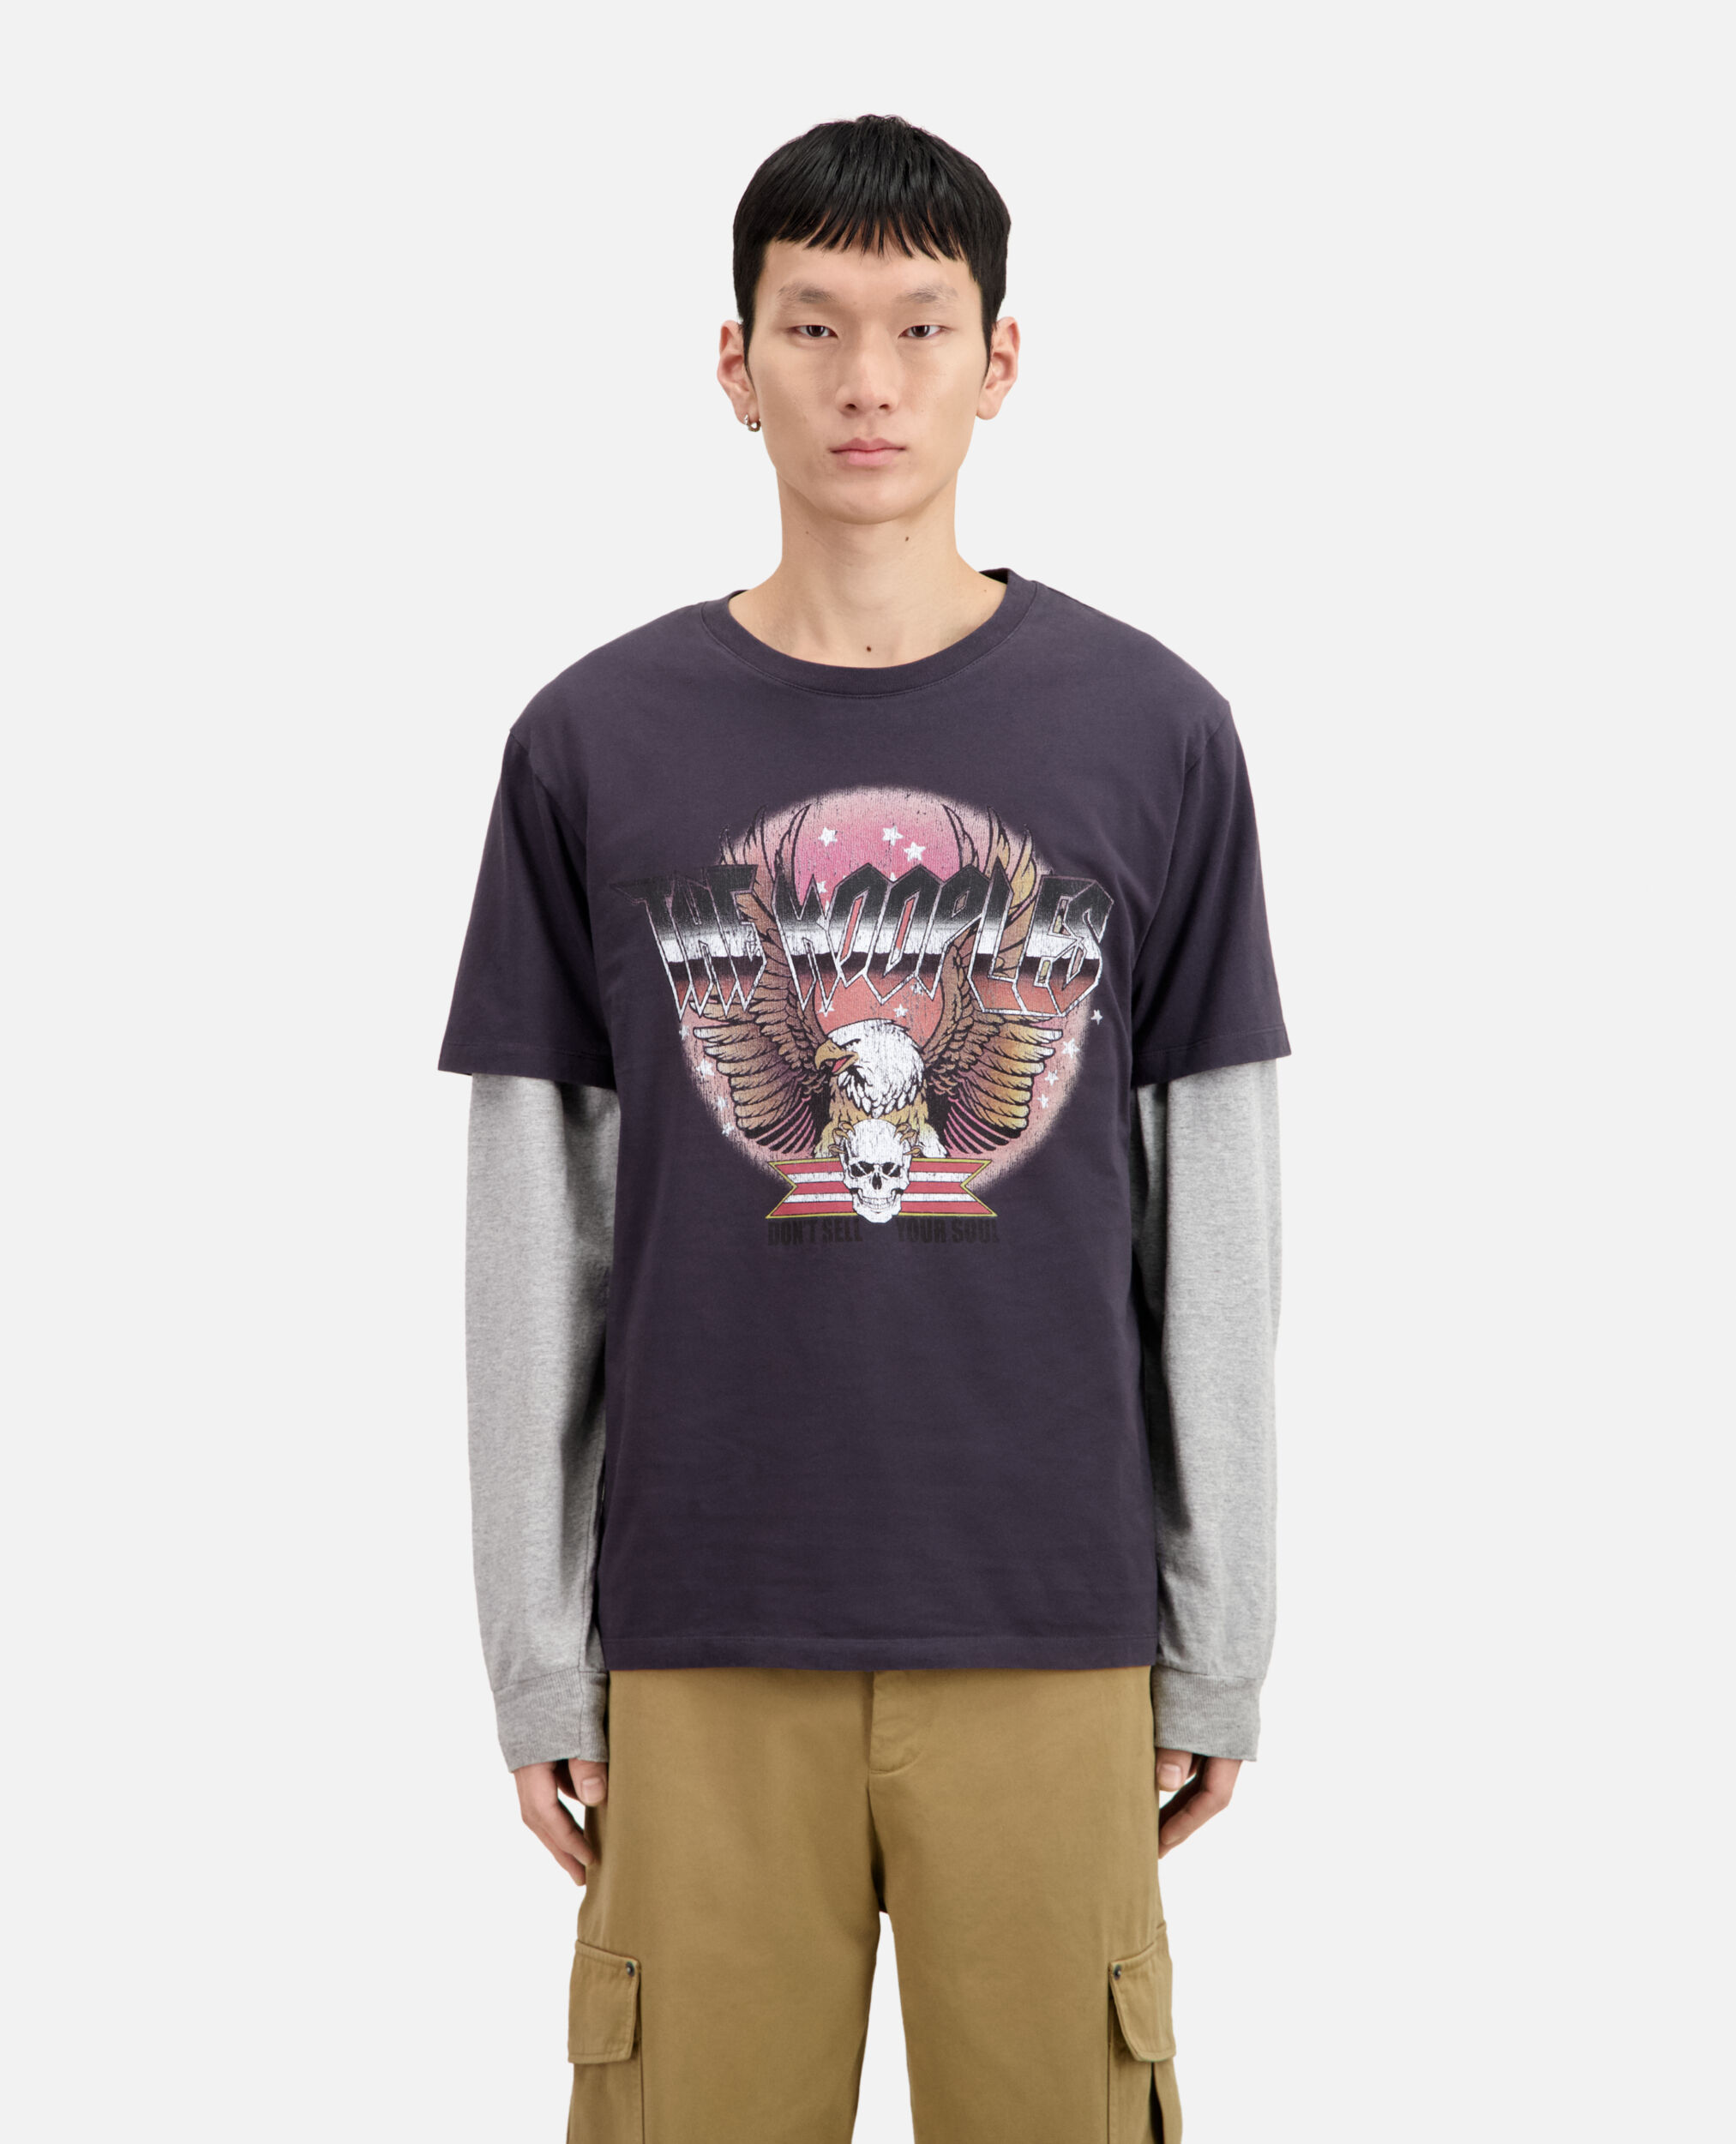 Carbongraues T-Shirt mit Rock Eagle-Siebdruck, CARBONE, hi-res image number null